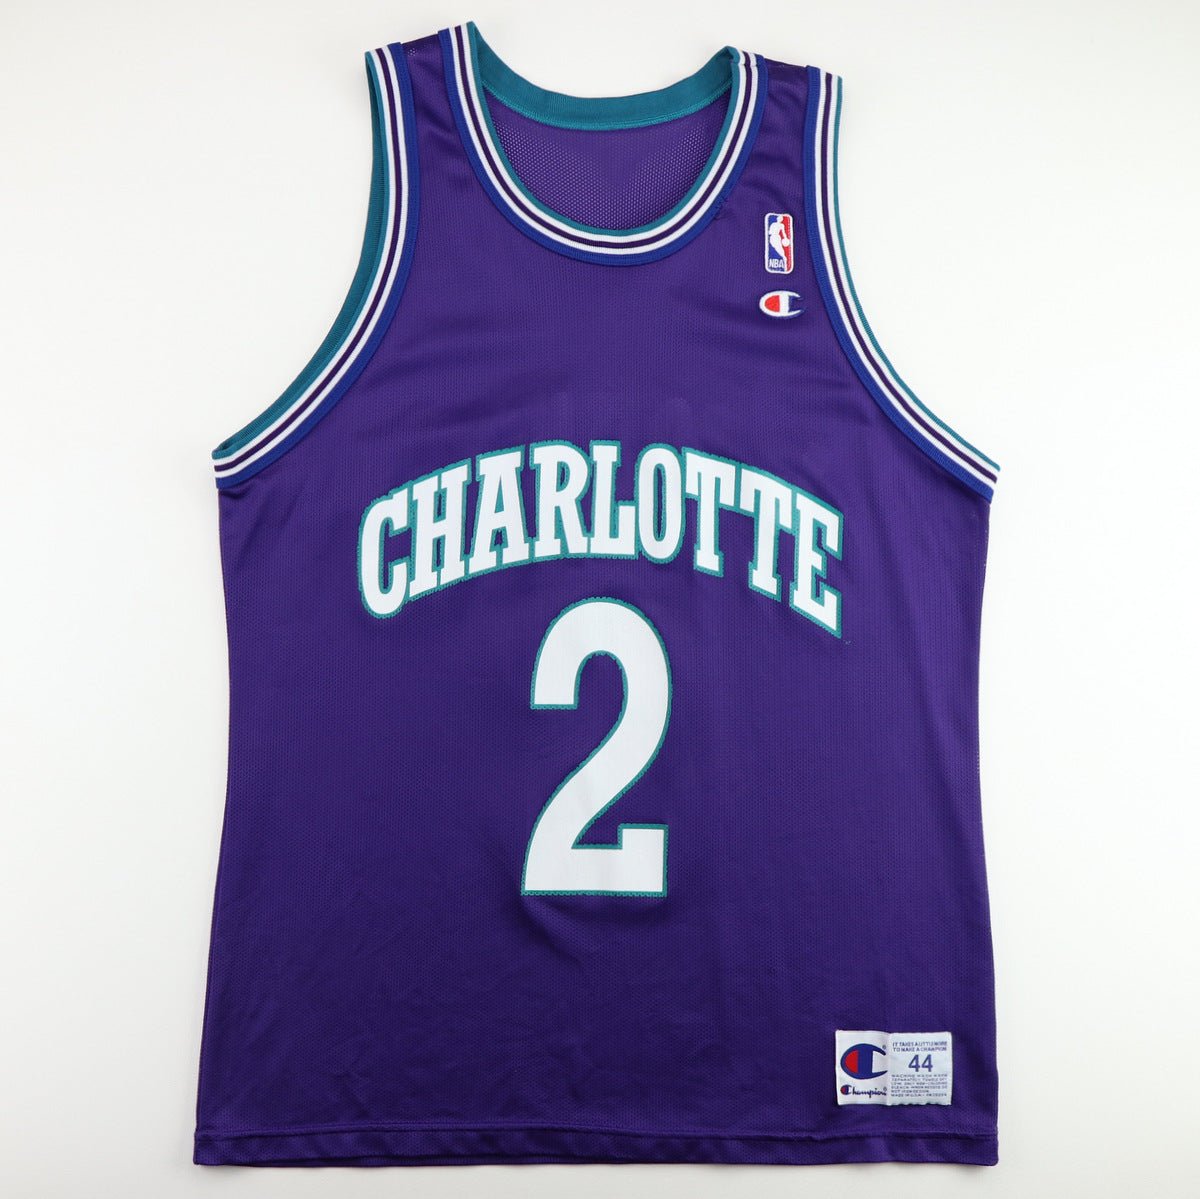 Retro Charlotte: Hornets' first uniforms